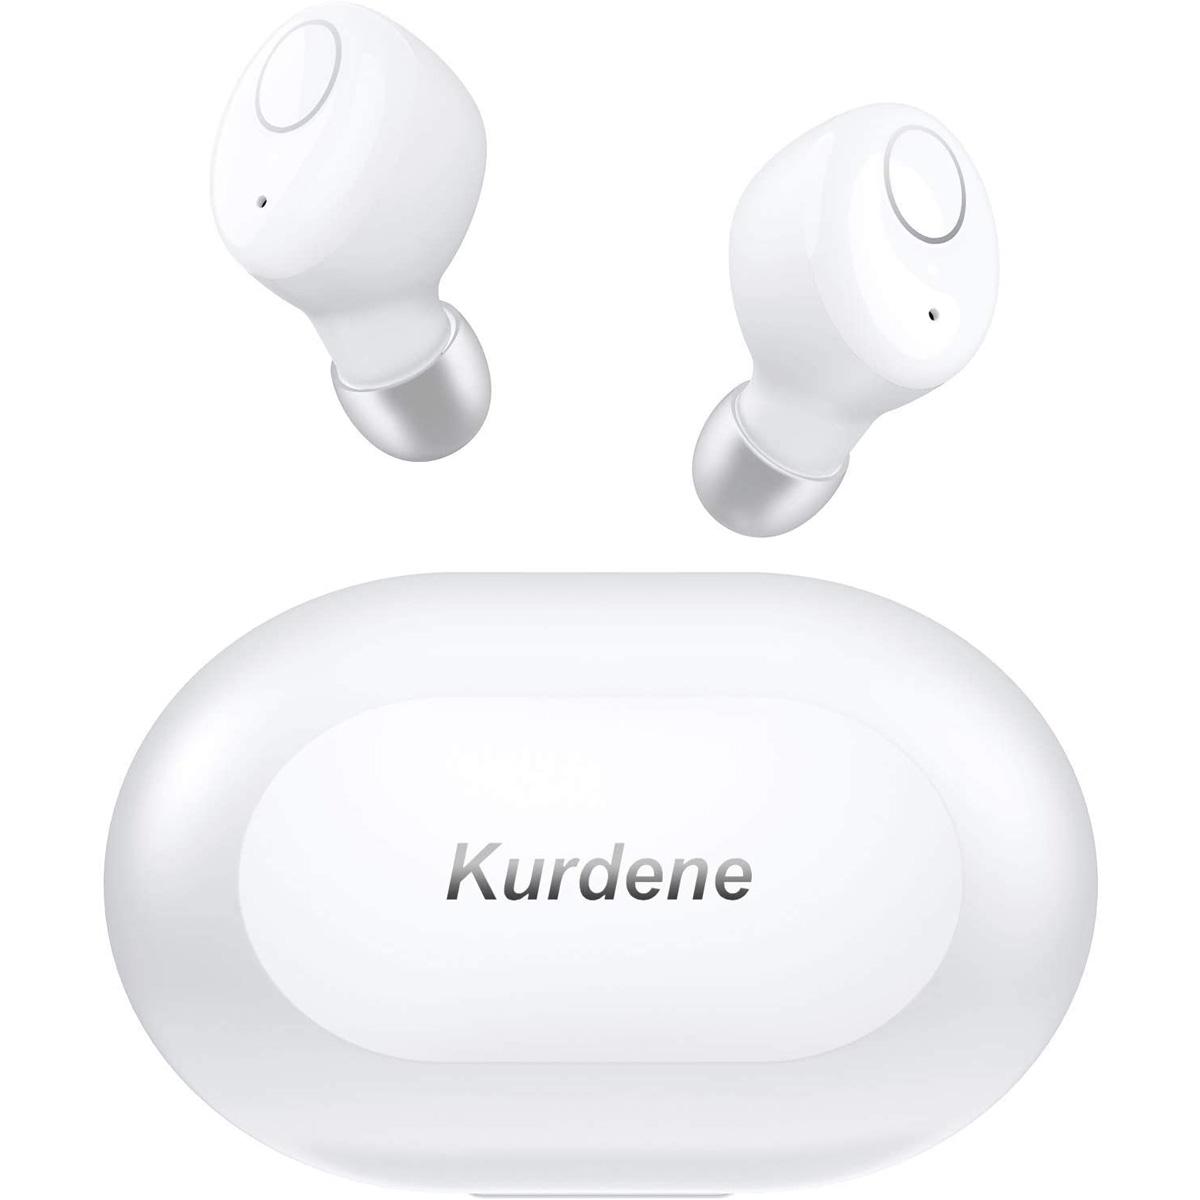 Kurdene Small Bluetooth Earbuds for $17.11